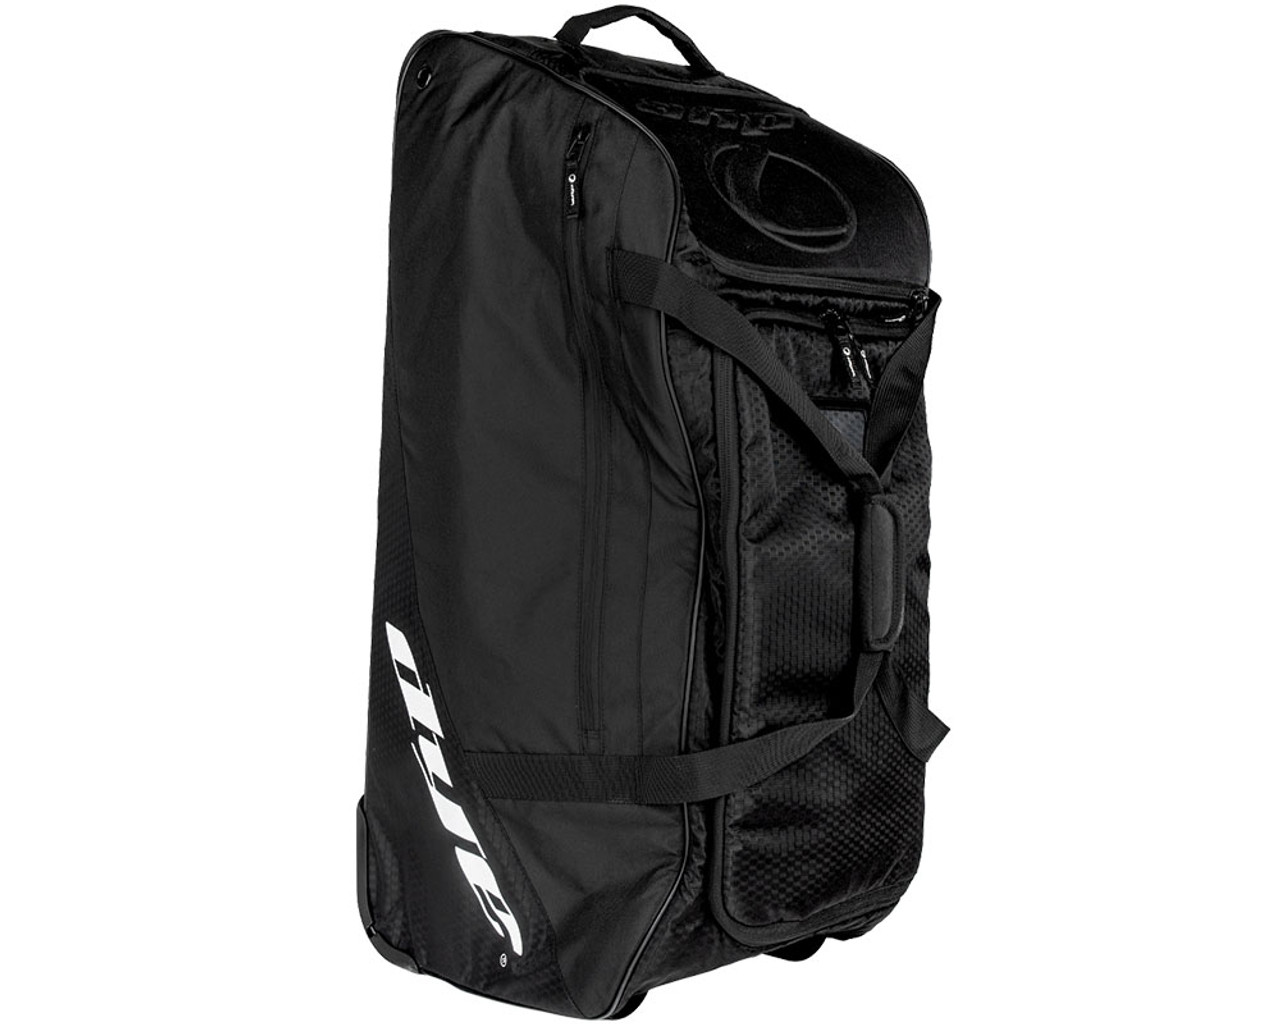 Dye The Discovery Gear Bag 1.5T - Black